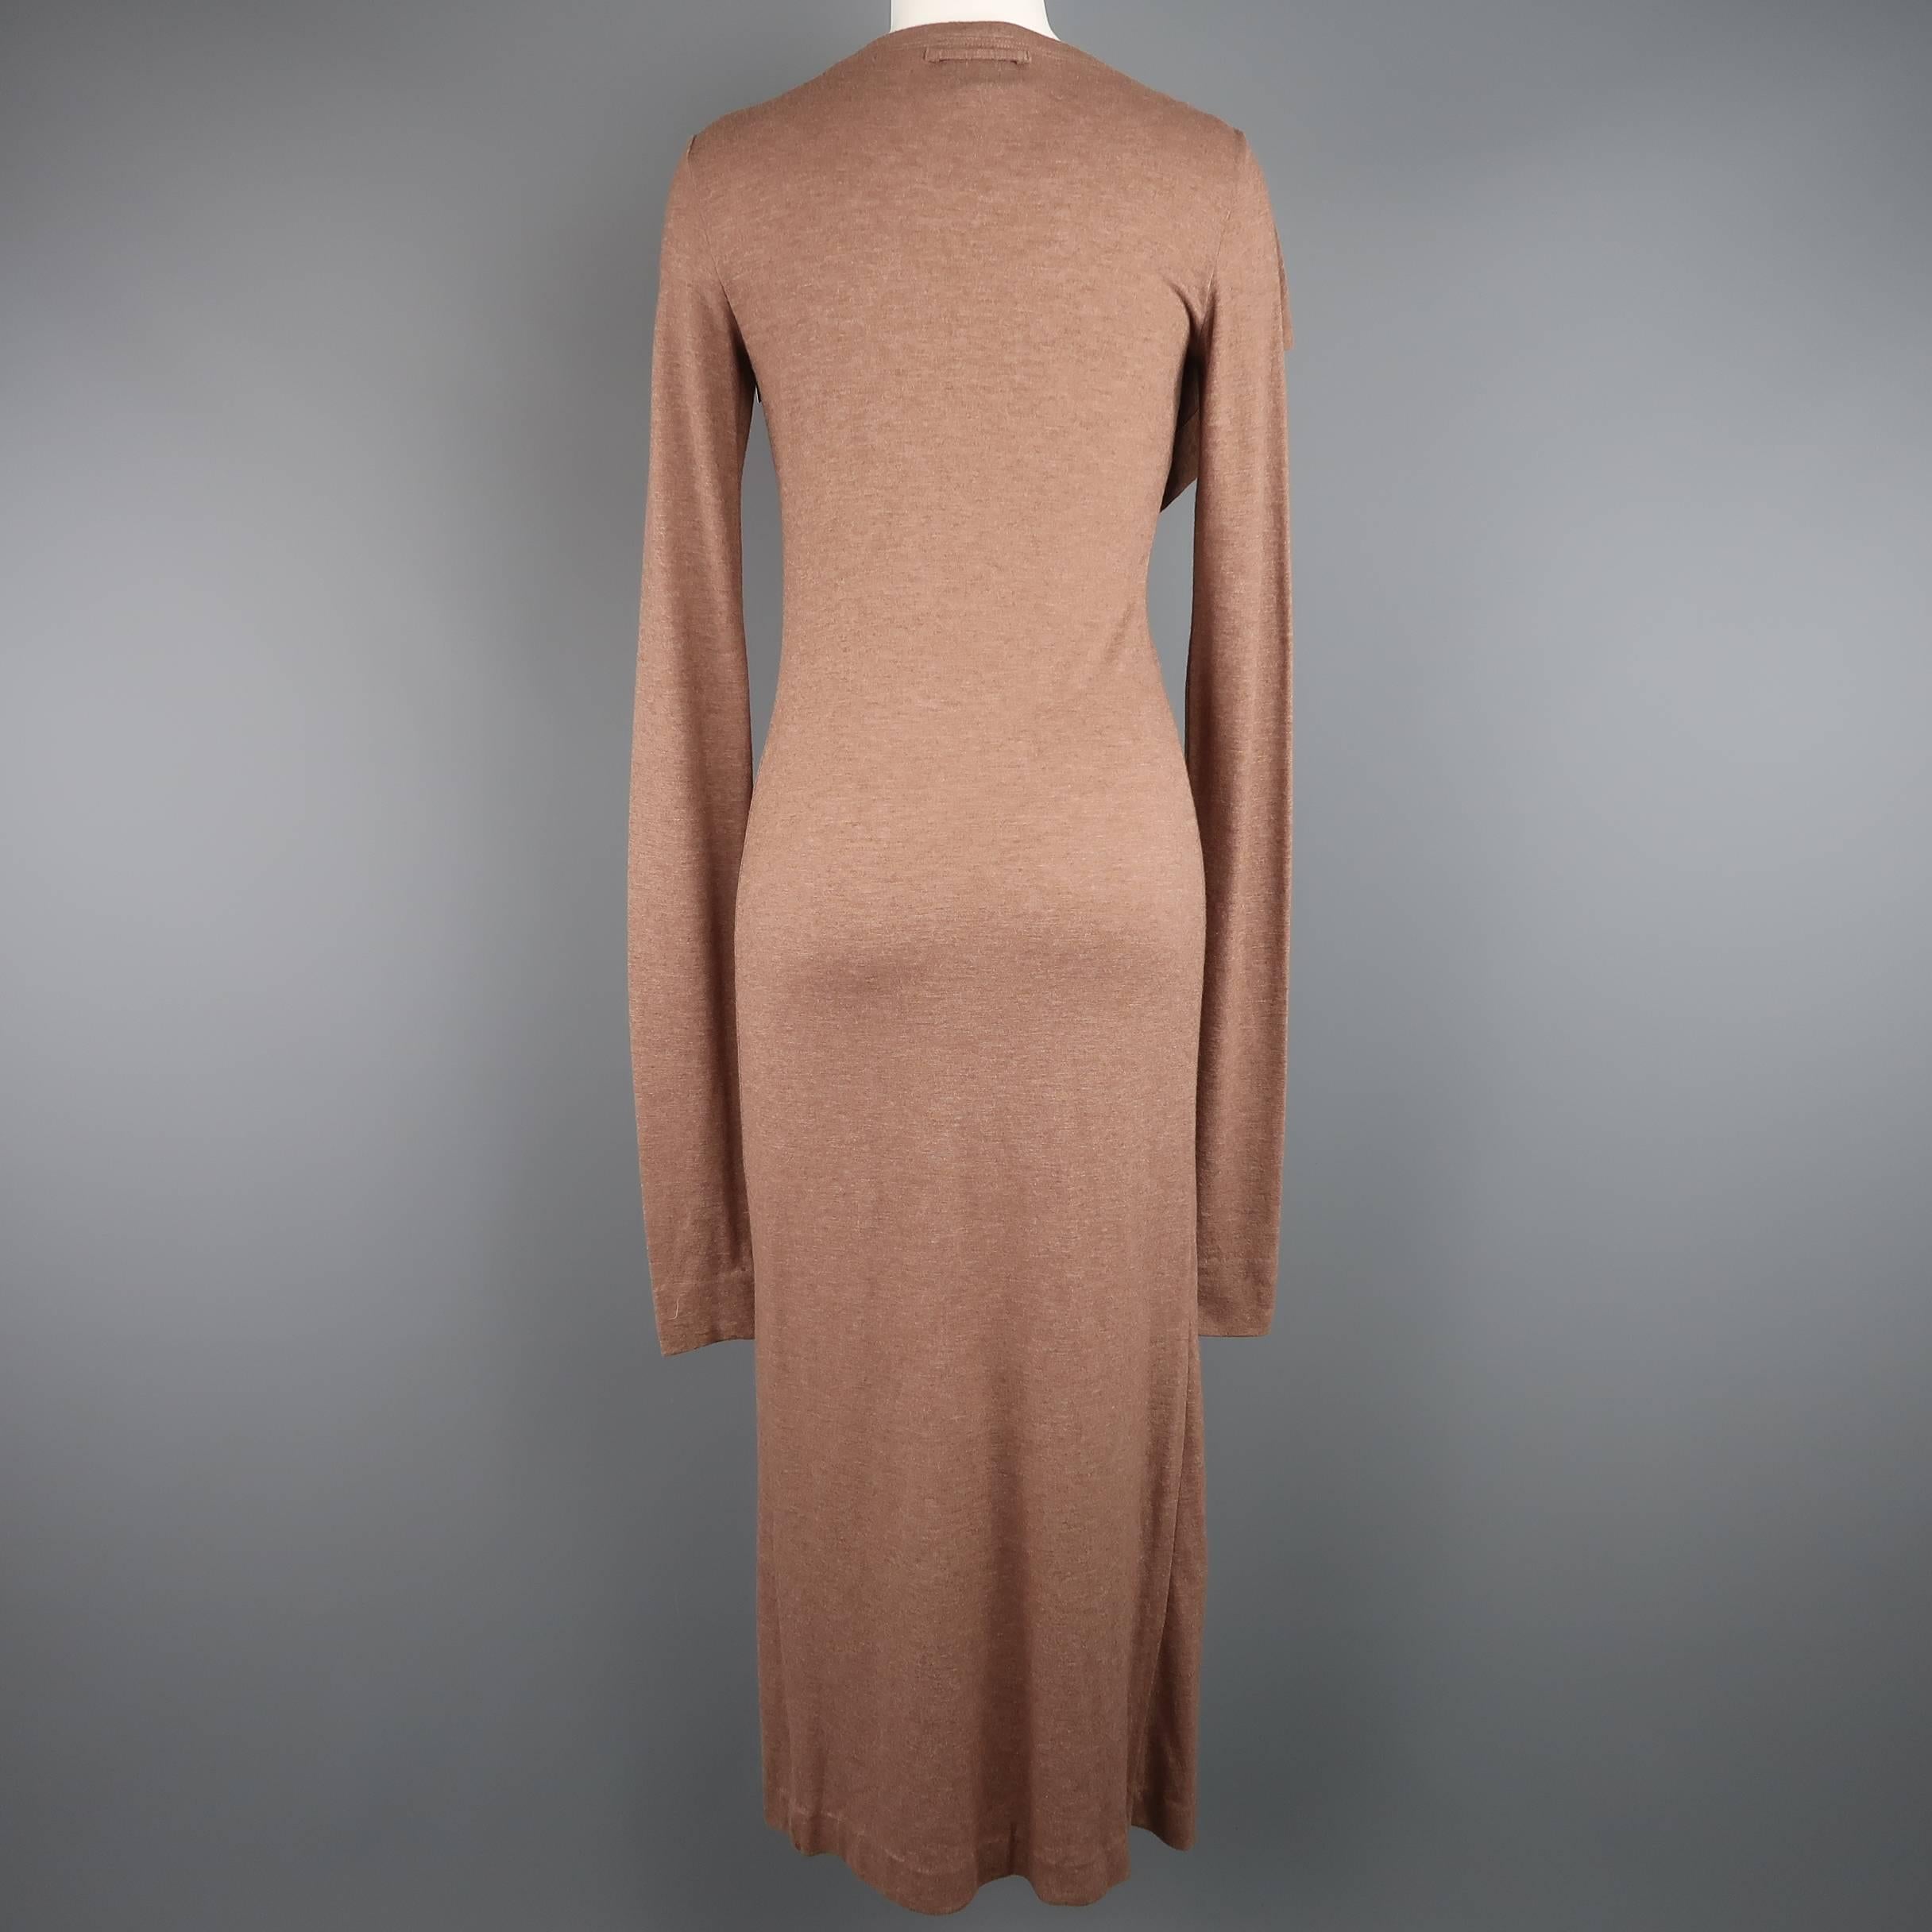 JEAN PAUL GAULTIER Size 8 Tan Wool/Rayon Ruffle Long Sleeve Maxi Dress 1